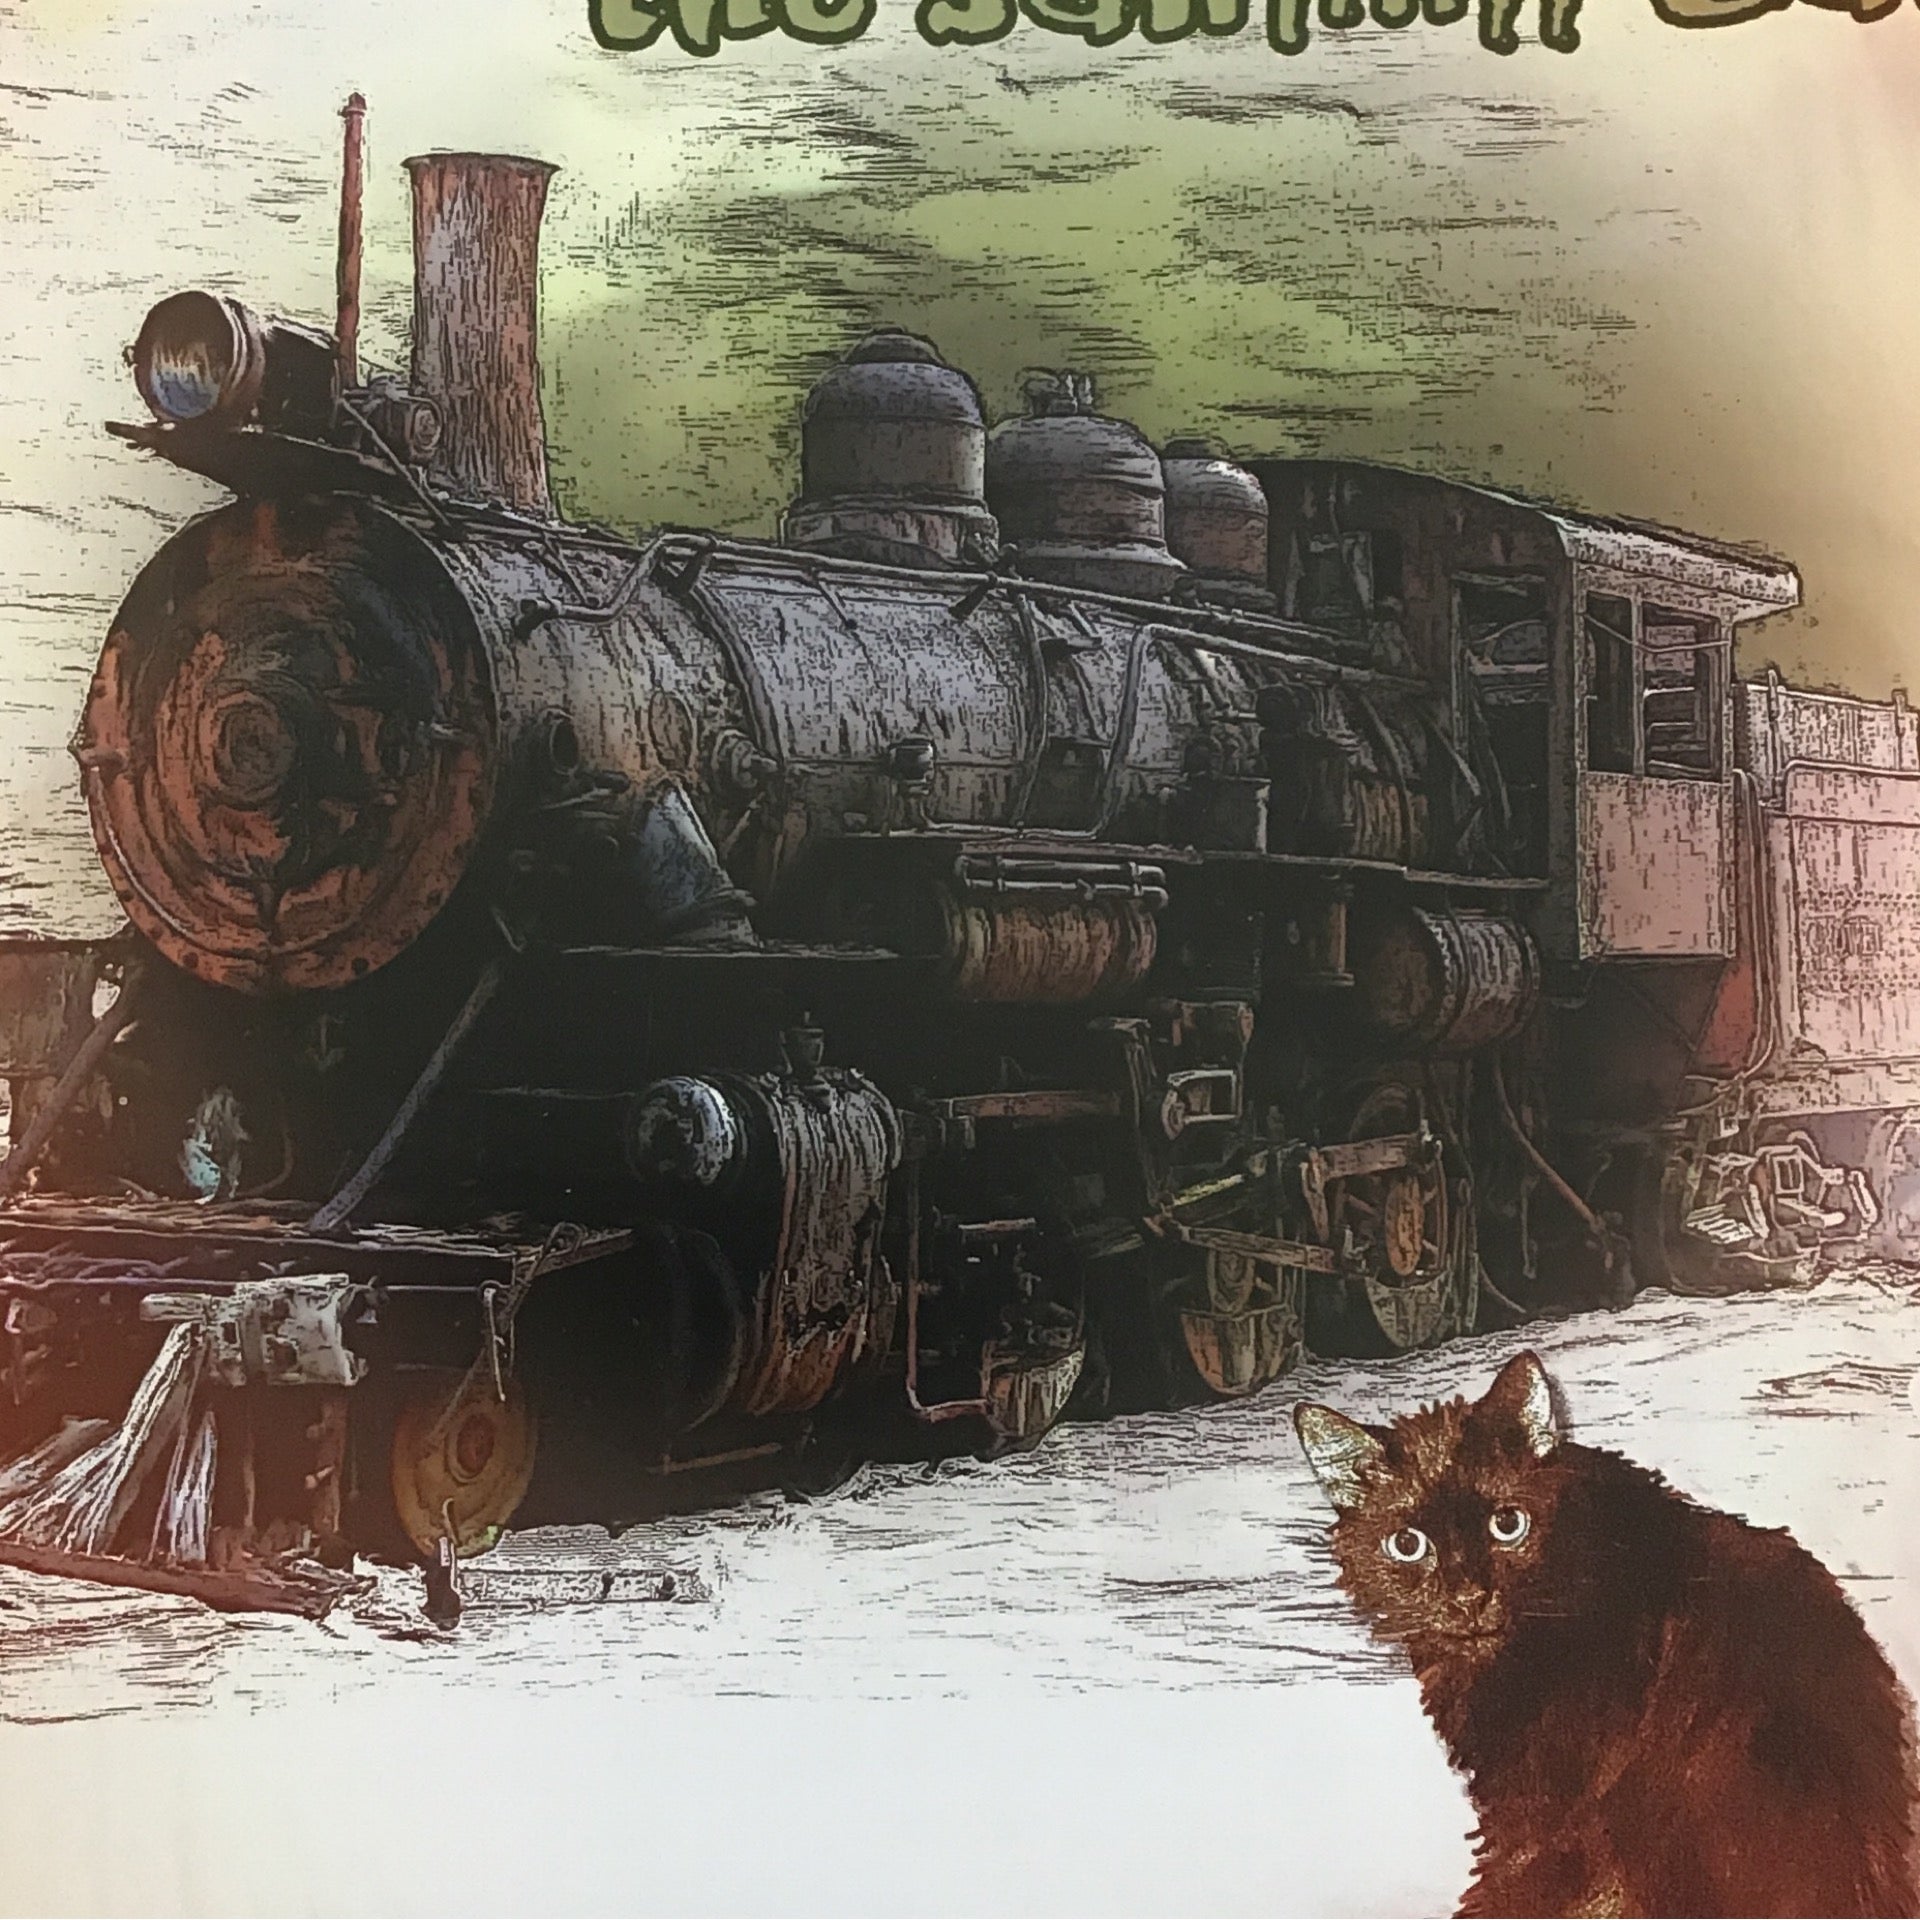 Cat Museum on Steam